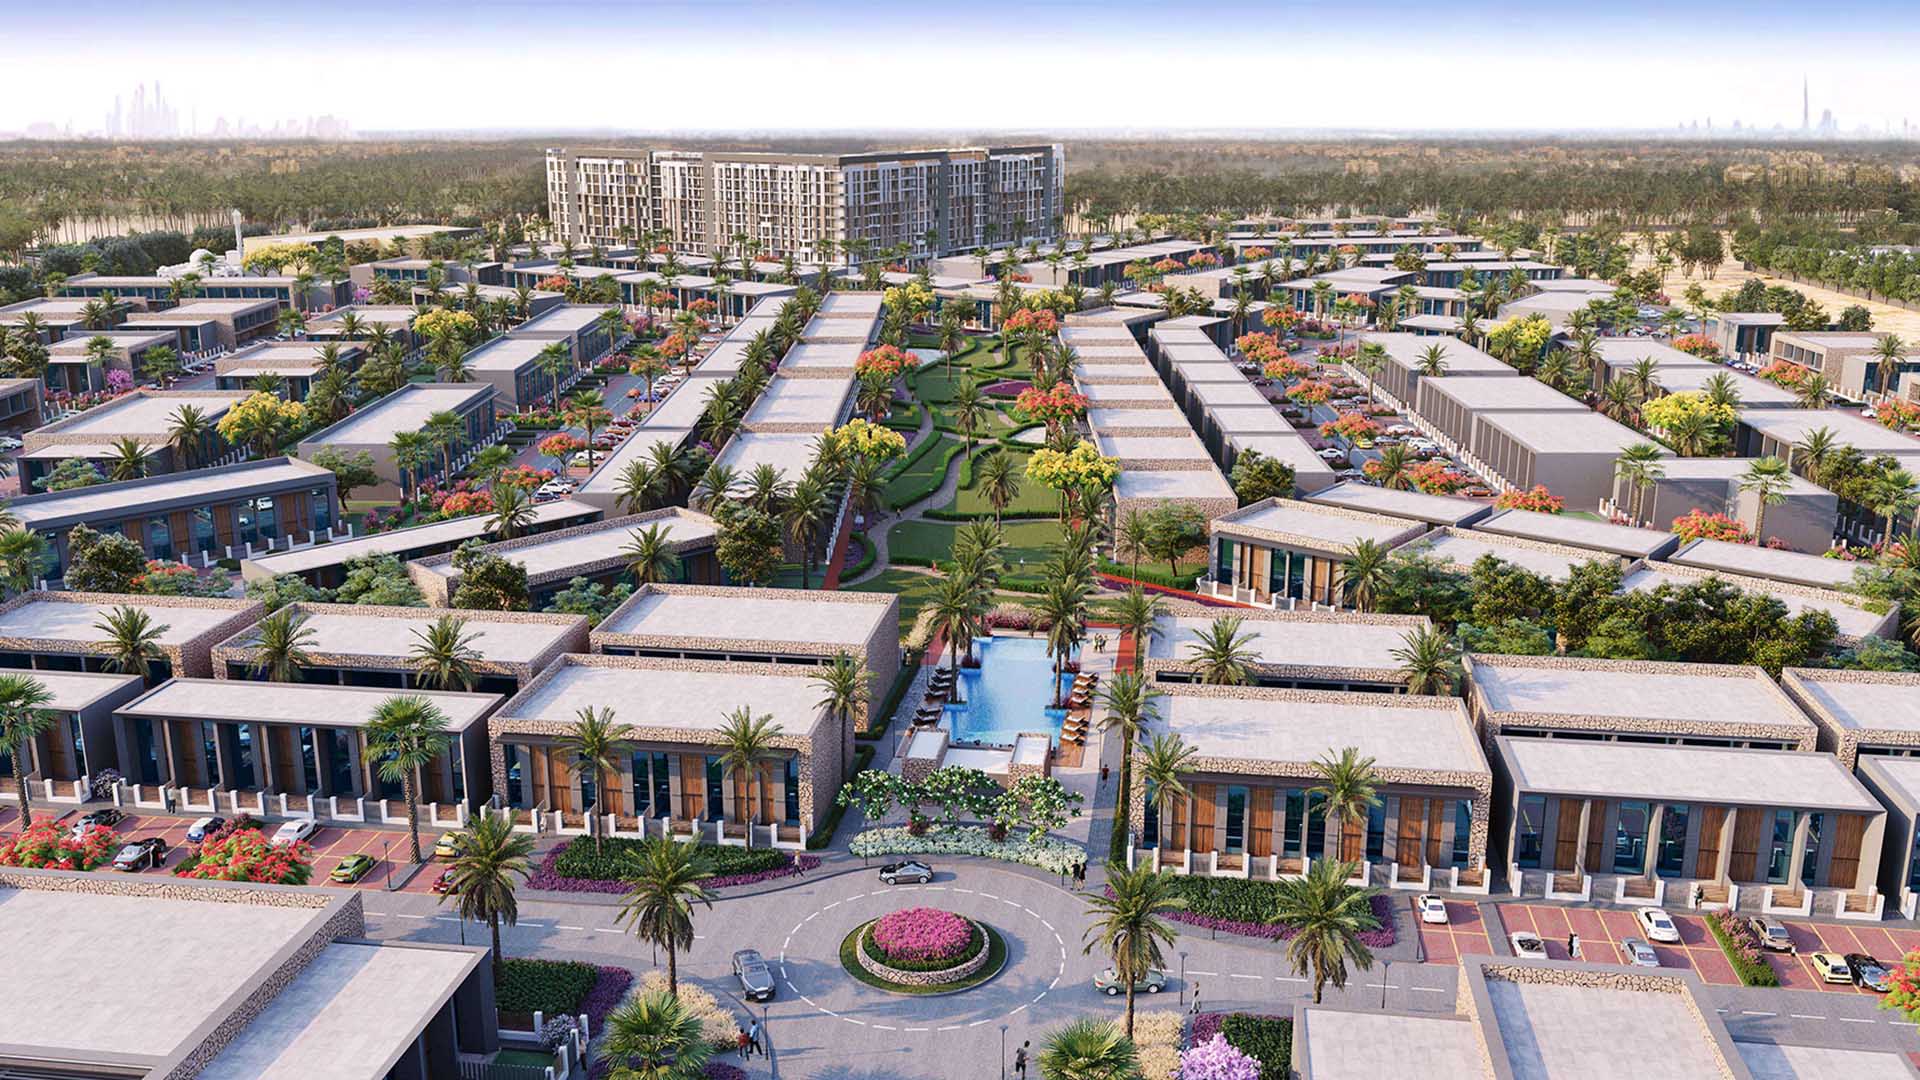 RUKAN LOFTS by Reportage Properties LLC in Rukan, Dubai - 6